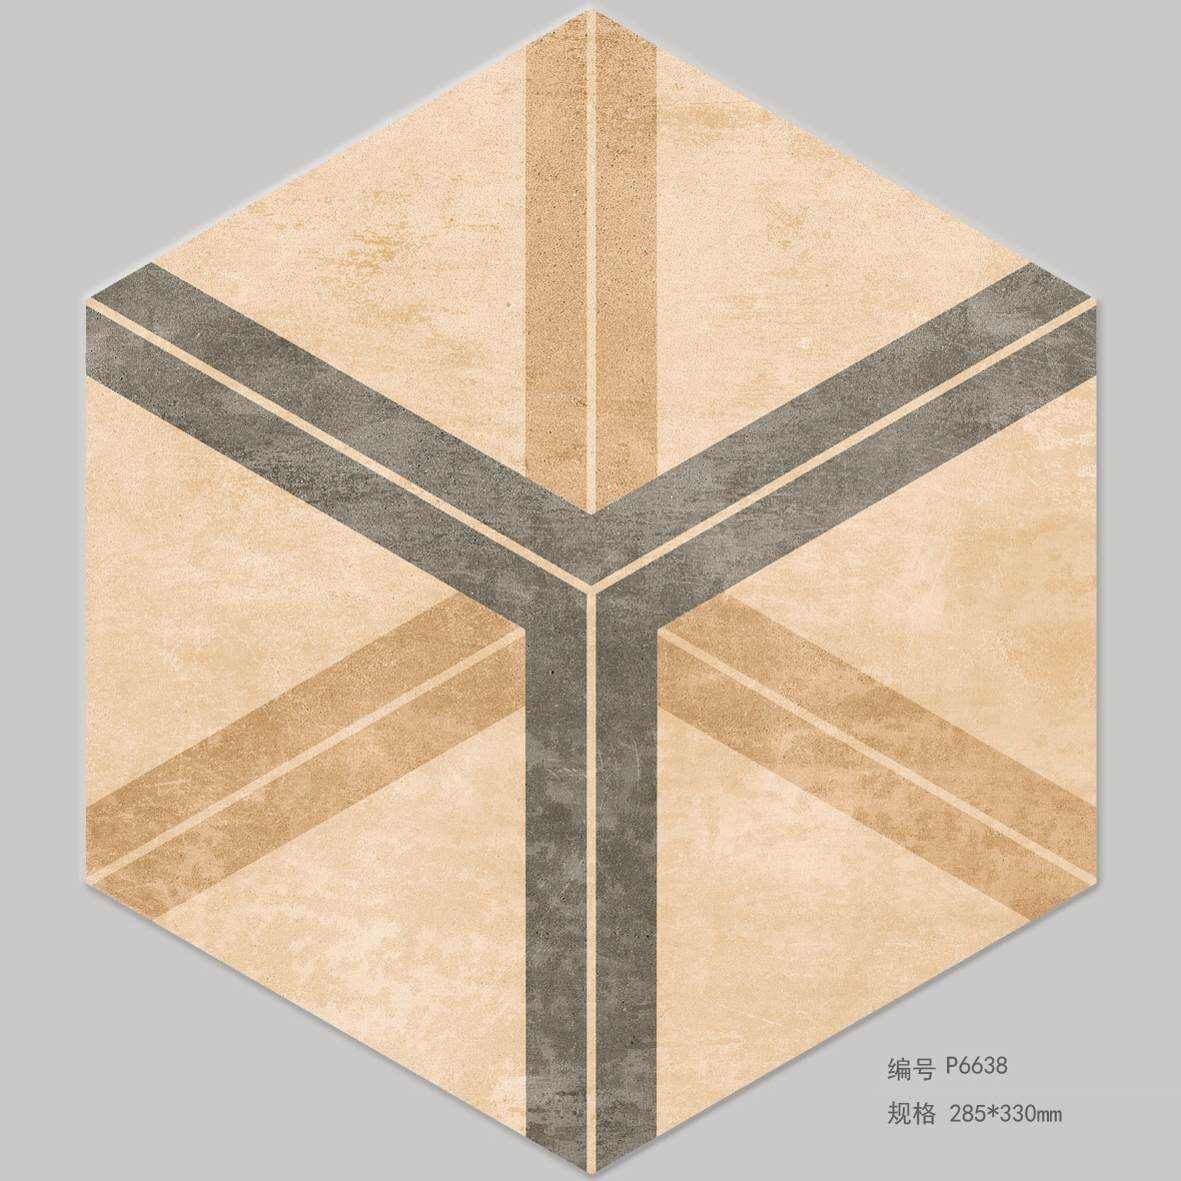 Hexagonal Rustic Tile Porcelain Tile for Floor Building Material